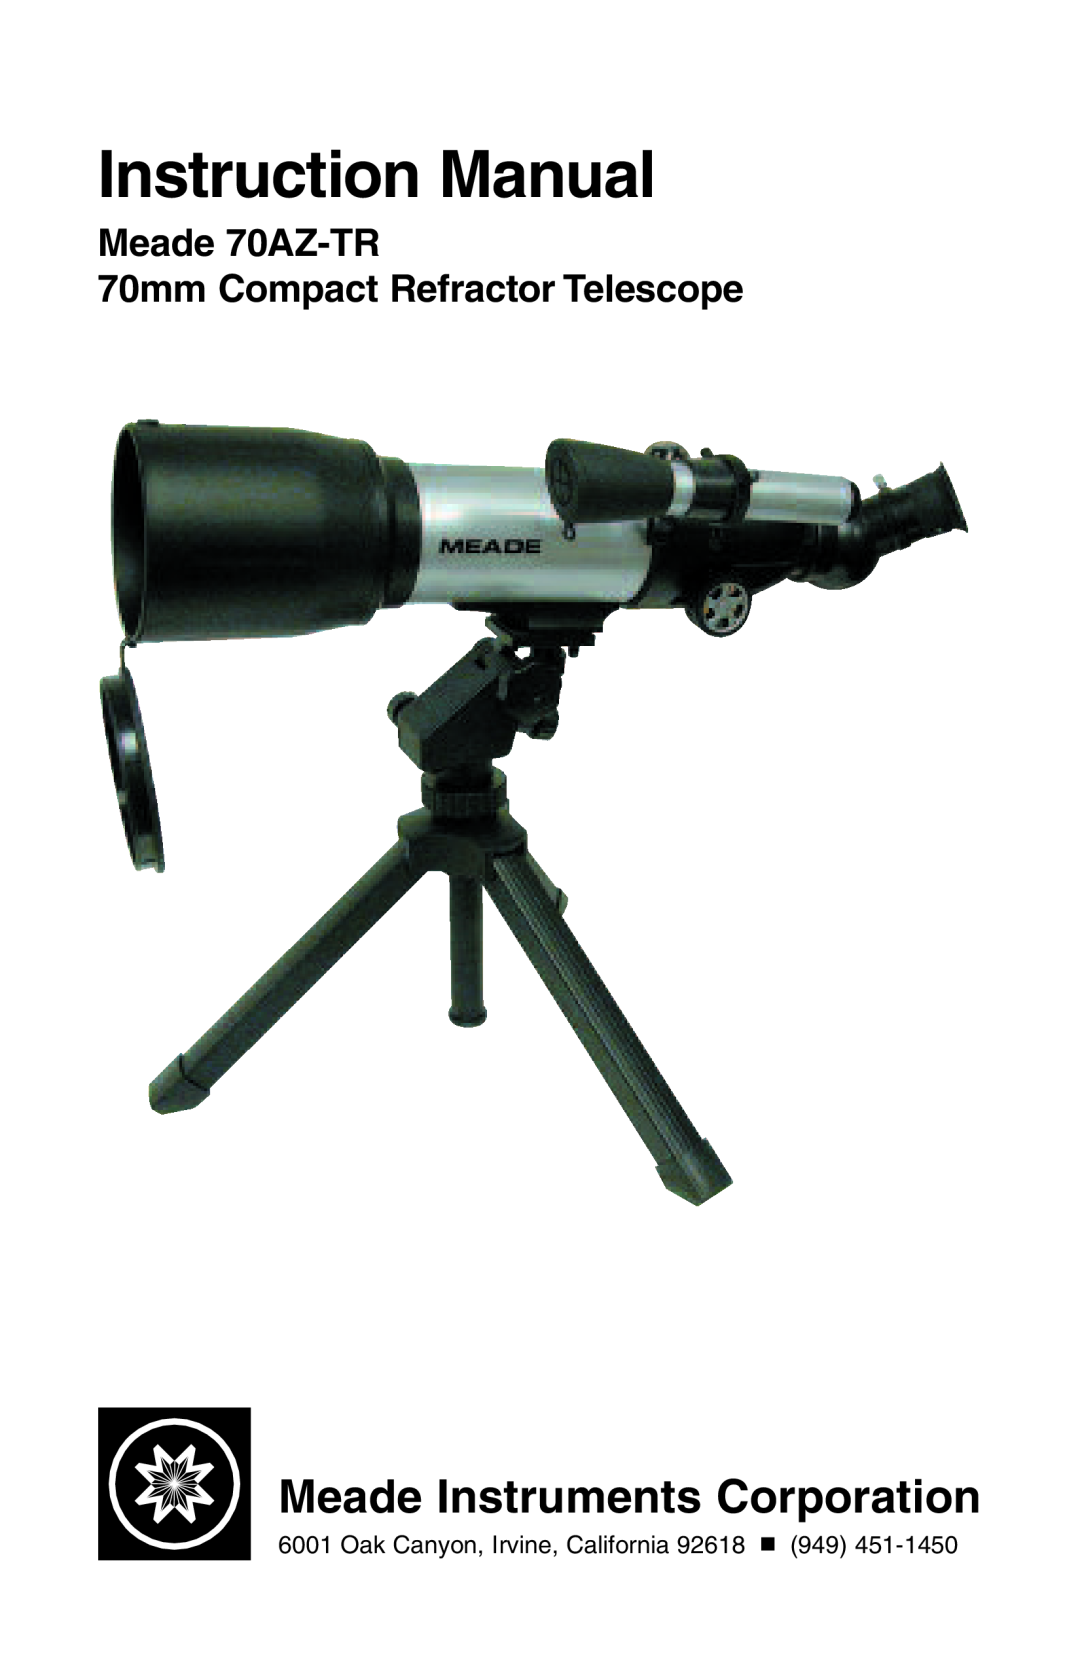 Meade instruction manual Meade 70AZ-TR 70mm Compact Refractor Telescope, Meade Instruments Corporation 